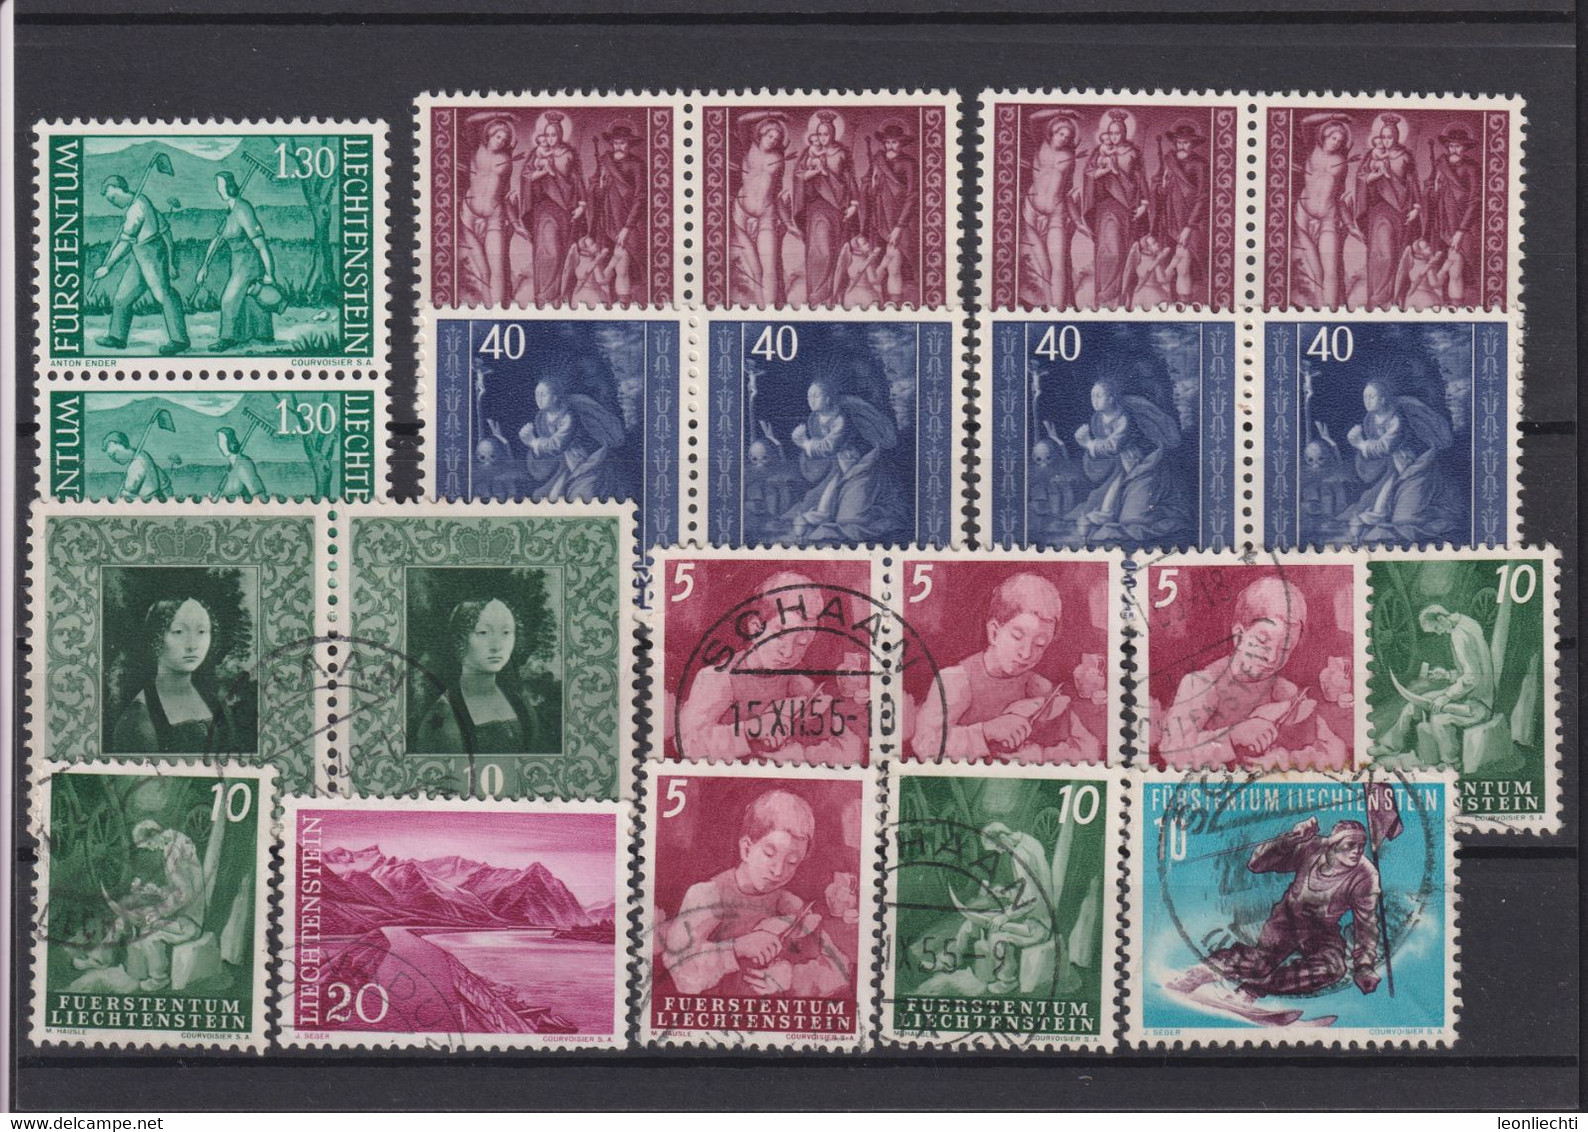 Liechtenstein Lot °  Briefmarken Gestempelt /  Stamps Stamped /  Timbres Oblitérés - Verzamelingen